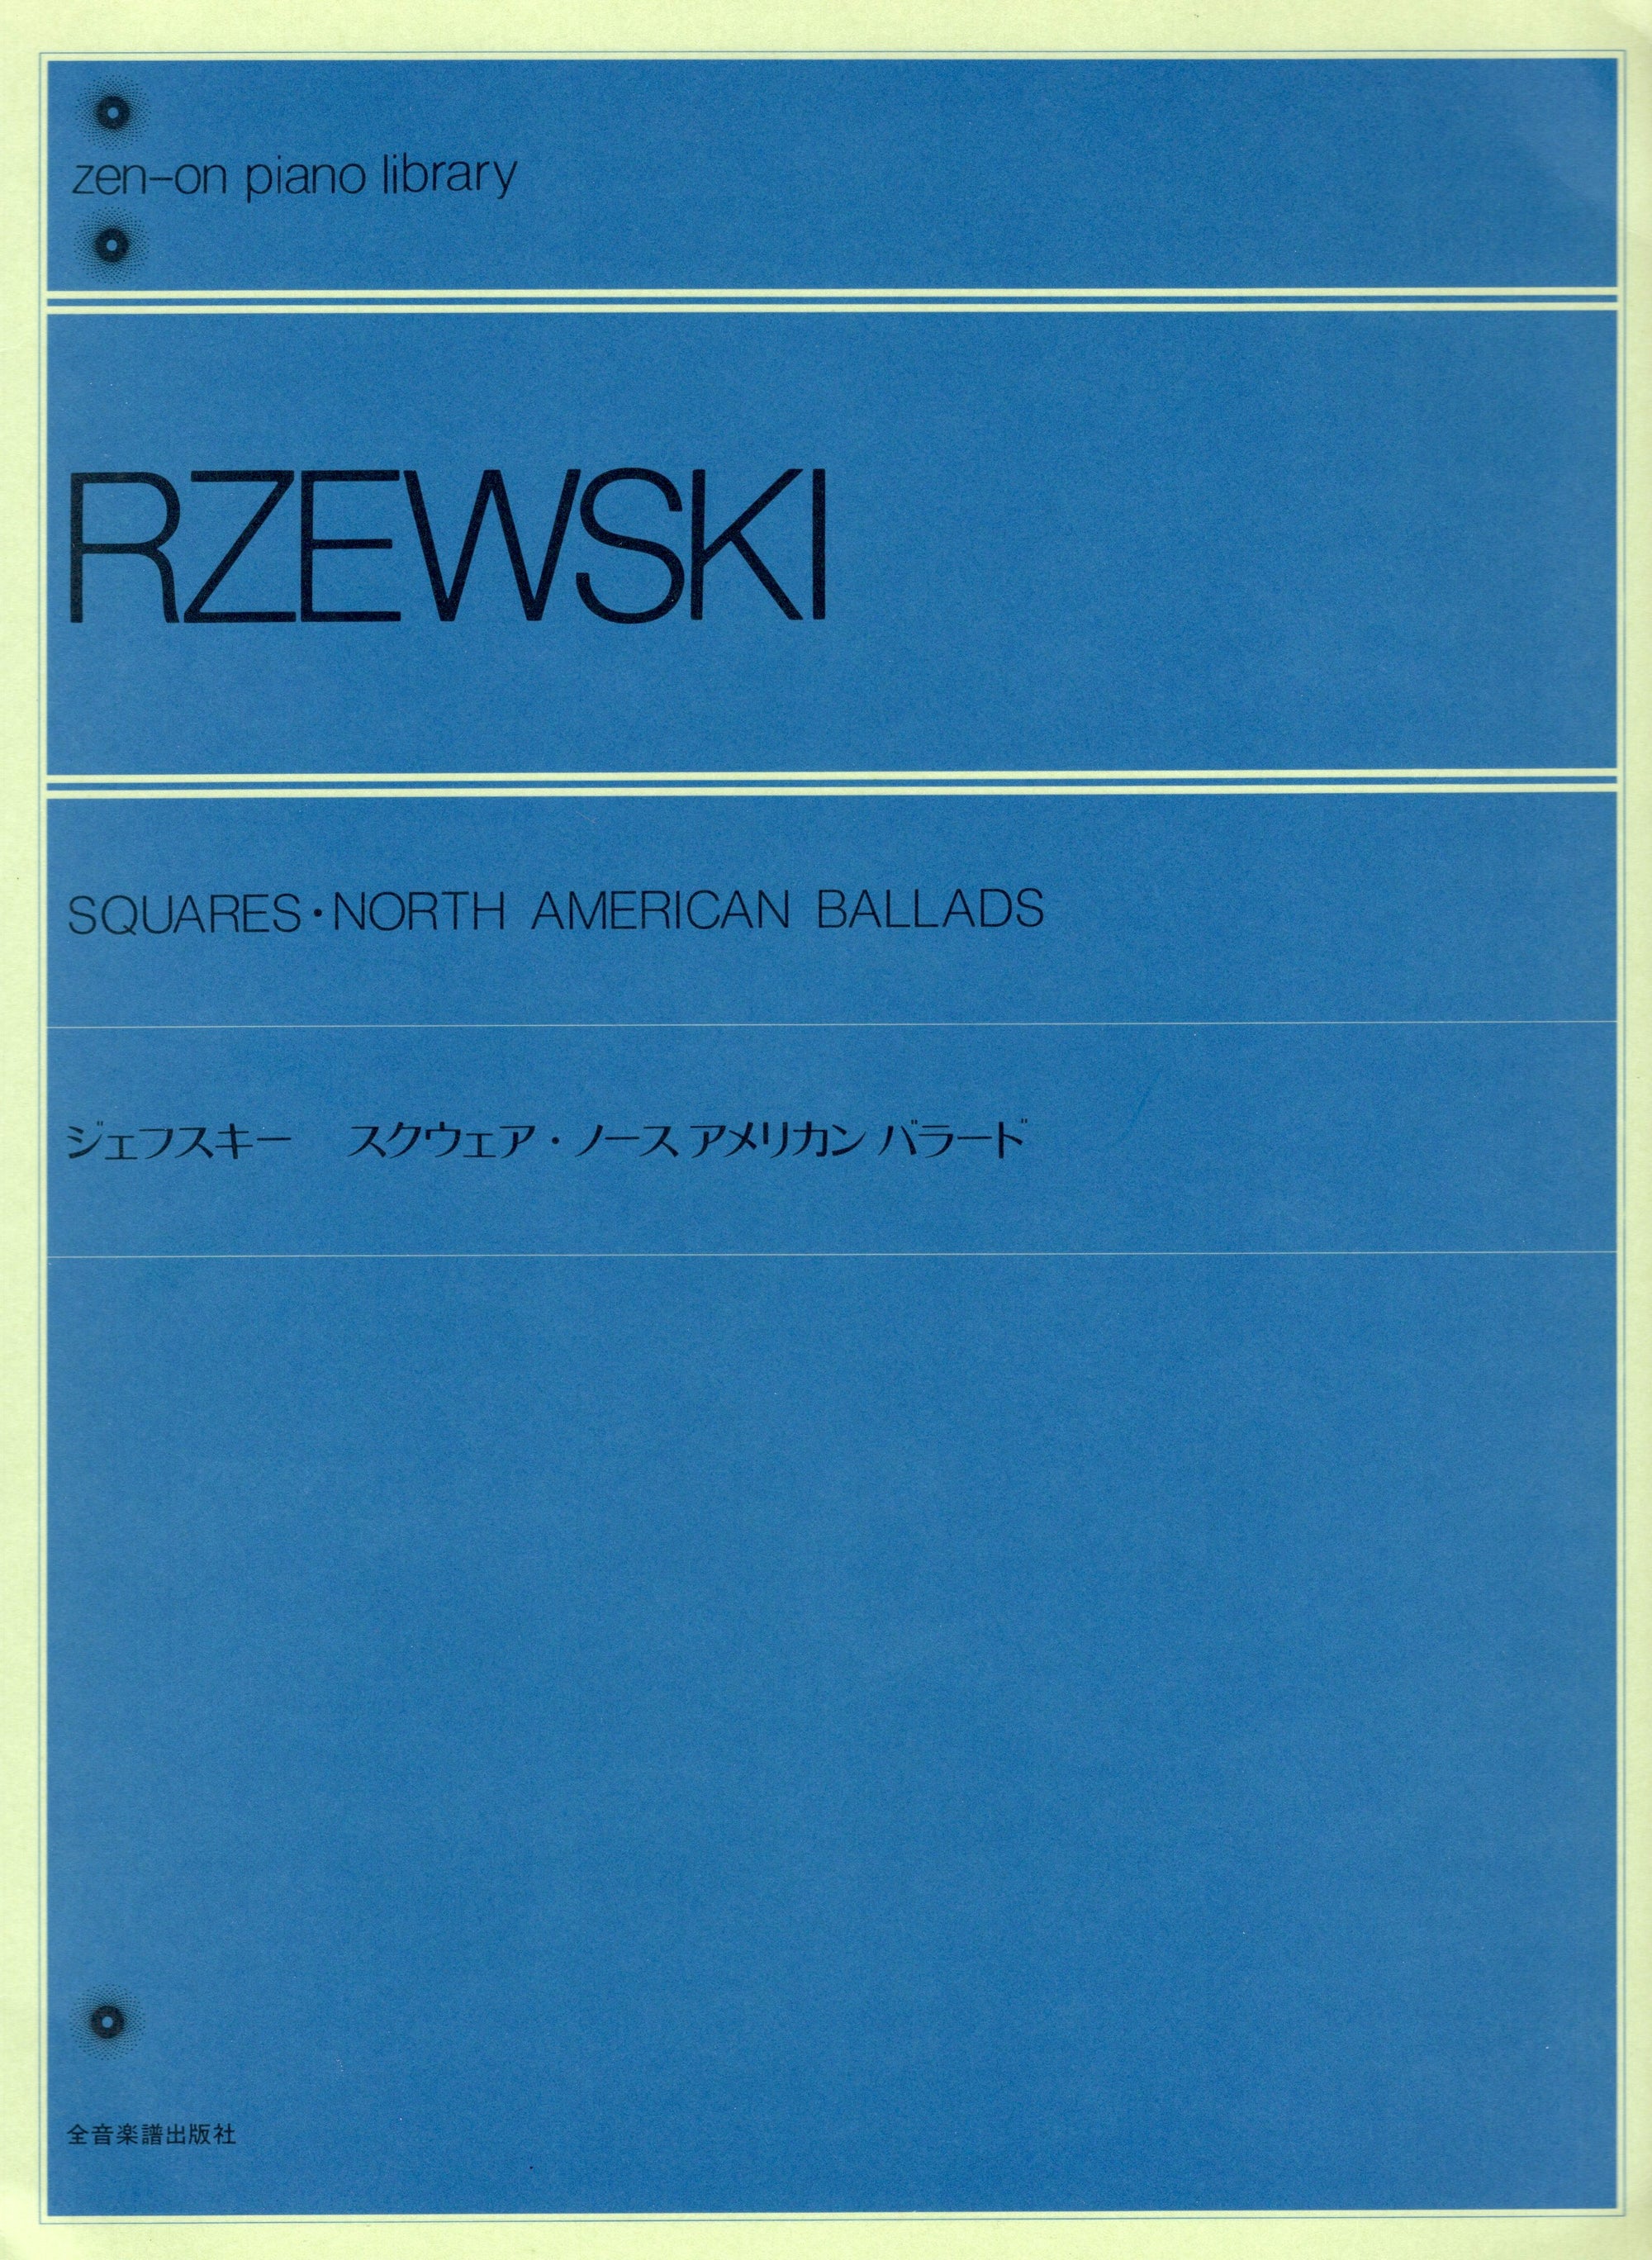 Rzewski: Squares and North American Ballads